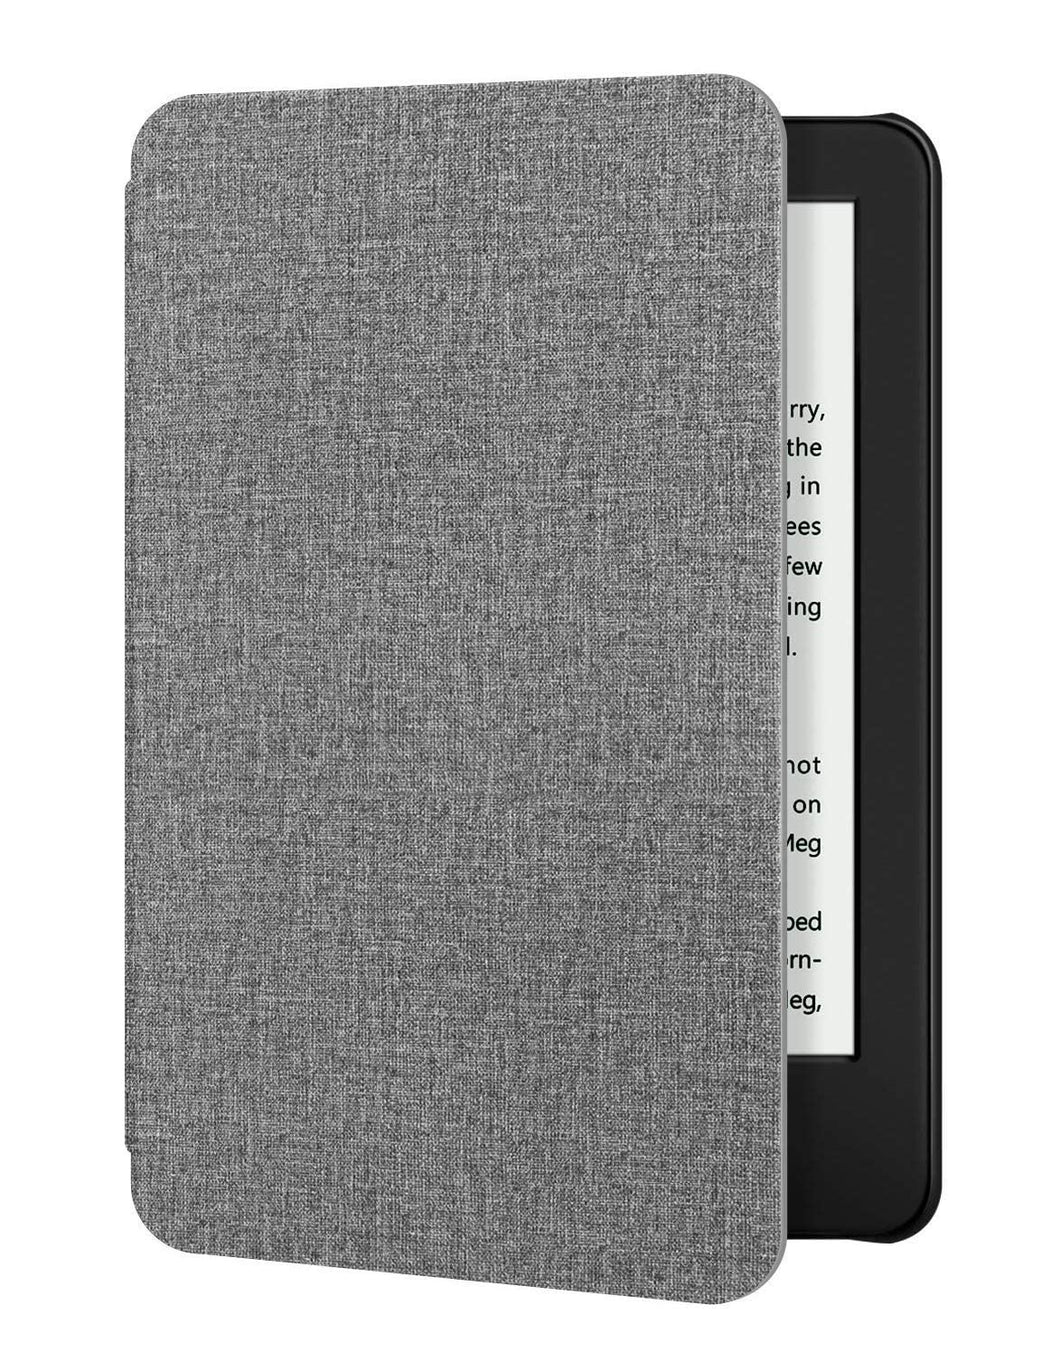 ProElite Premium Nylon Fabric Smart Flip case Cover for Amazon Kindle Paperwhite 11th Generation 6.8 inch 2021, Grey (Fits Signature Edition Also)